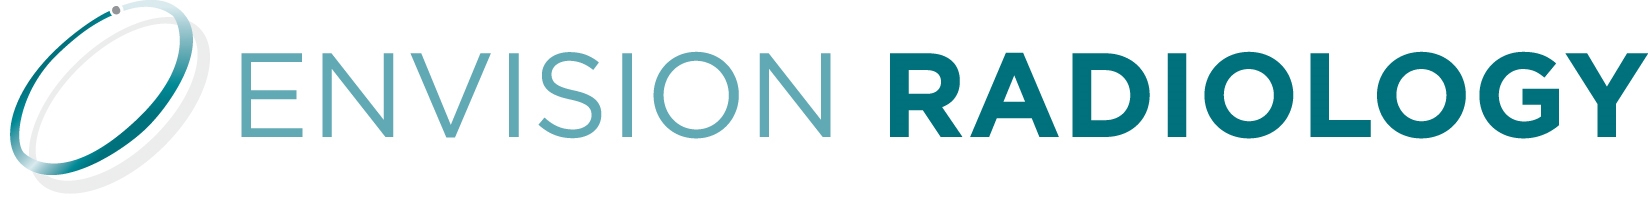 Health Images/Envision Radiology logo